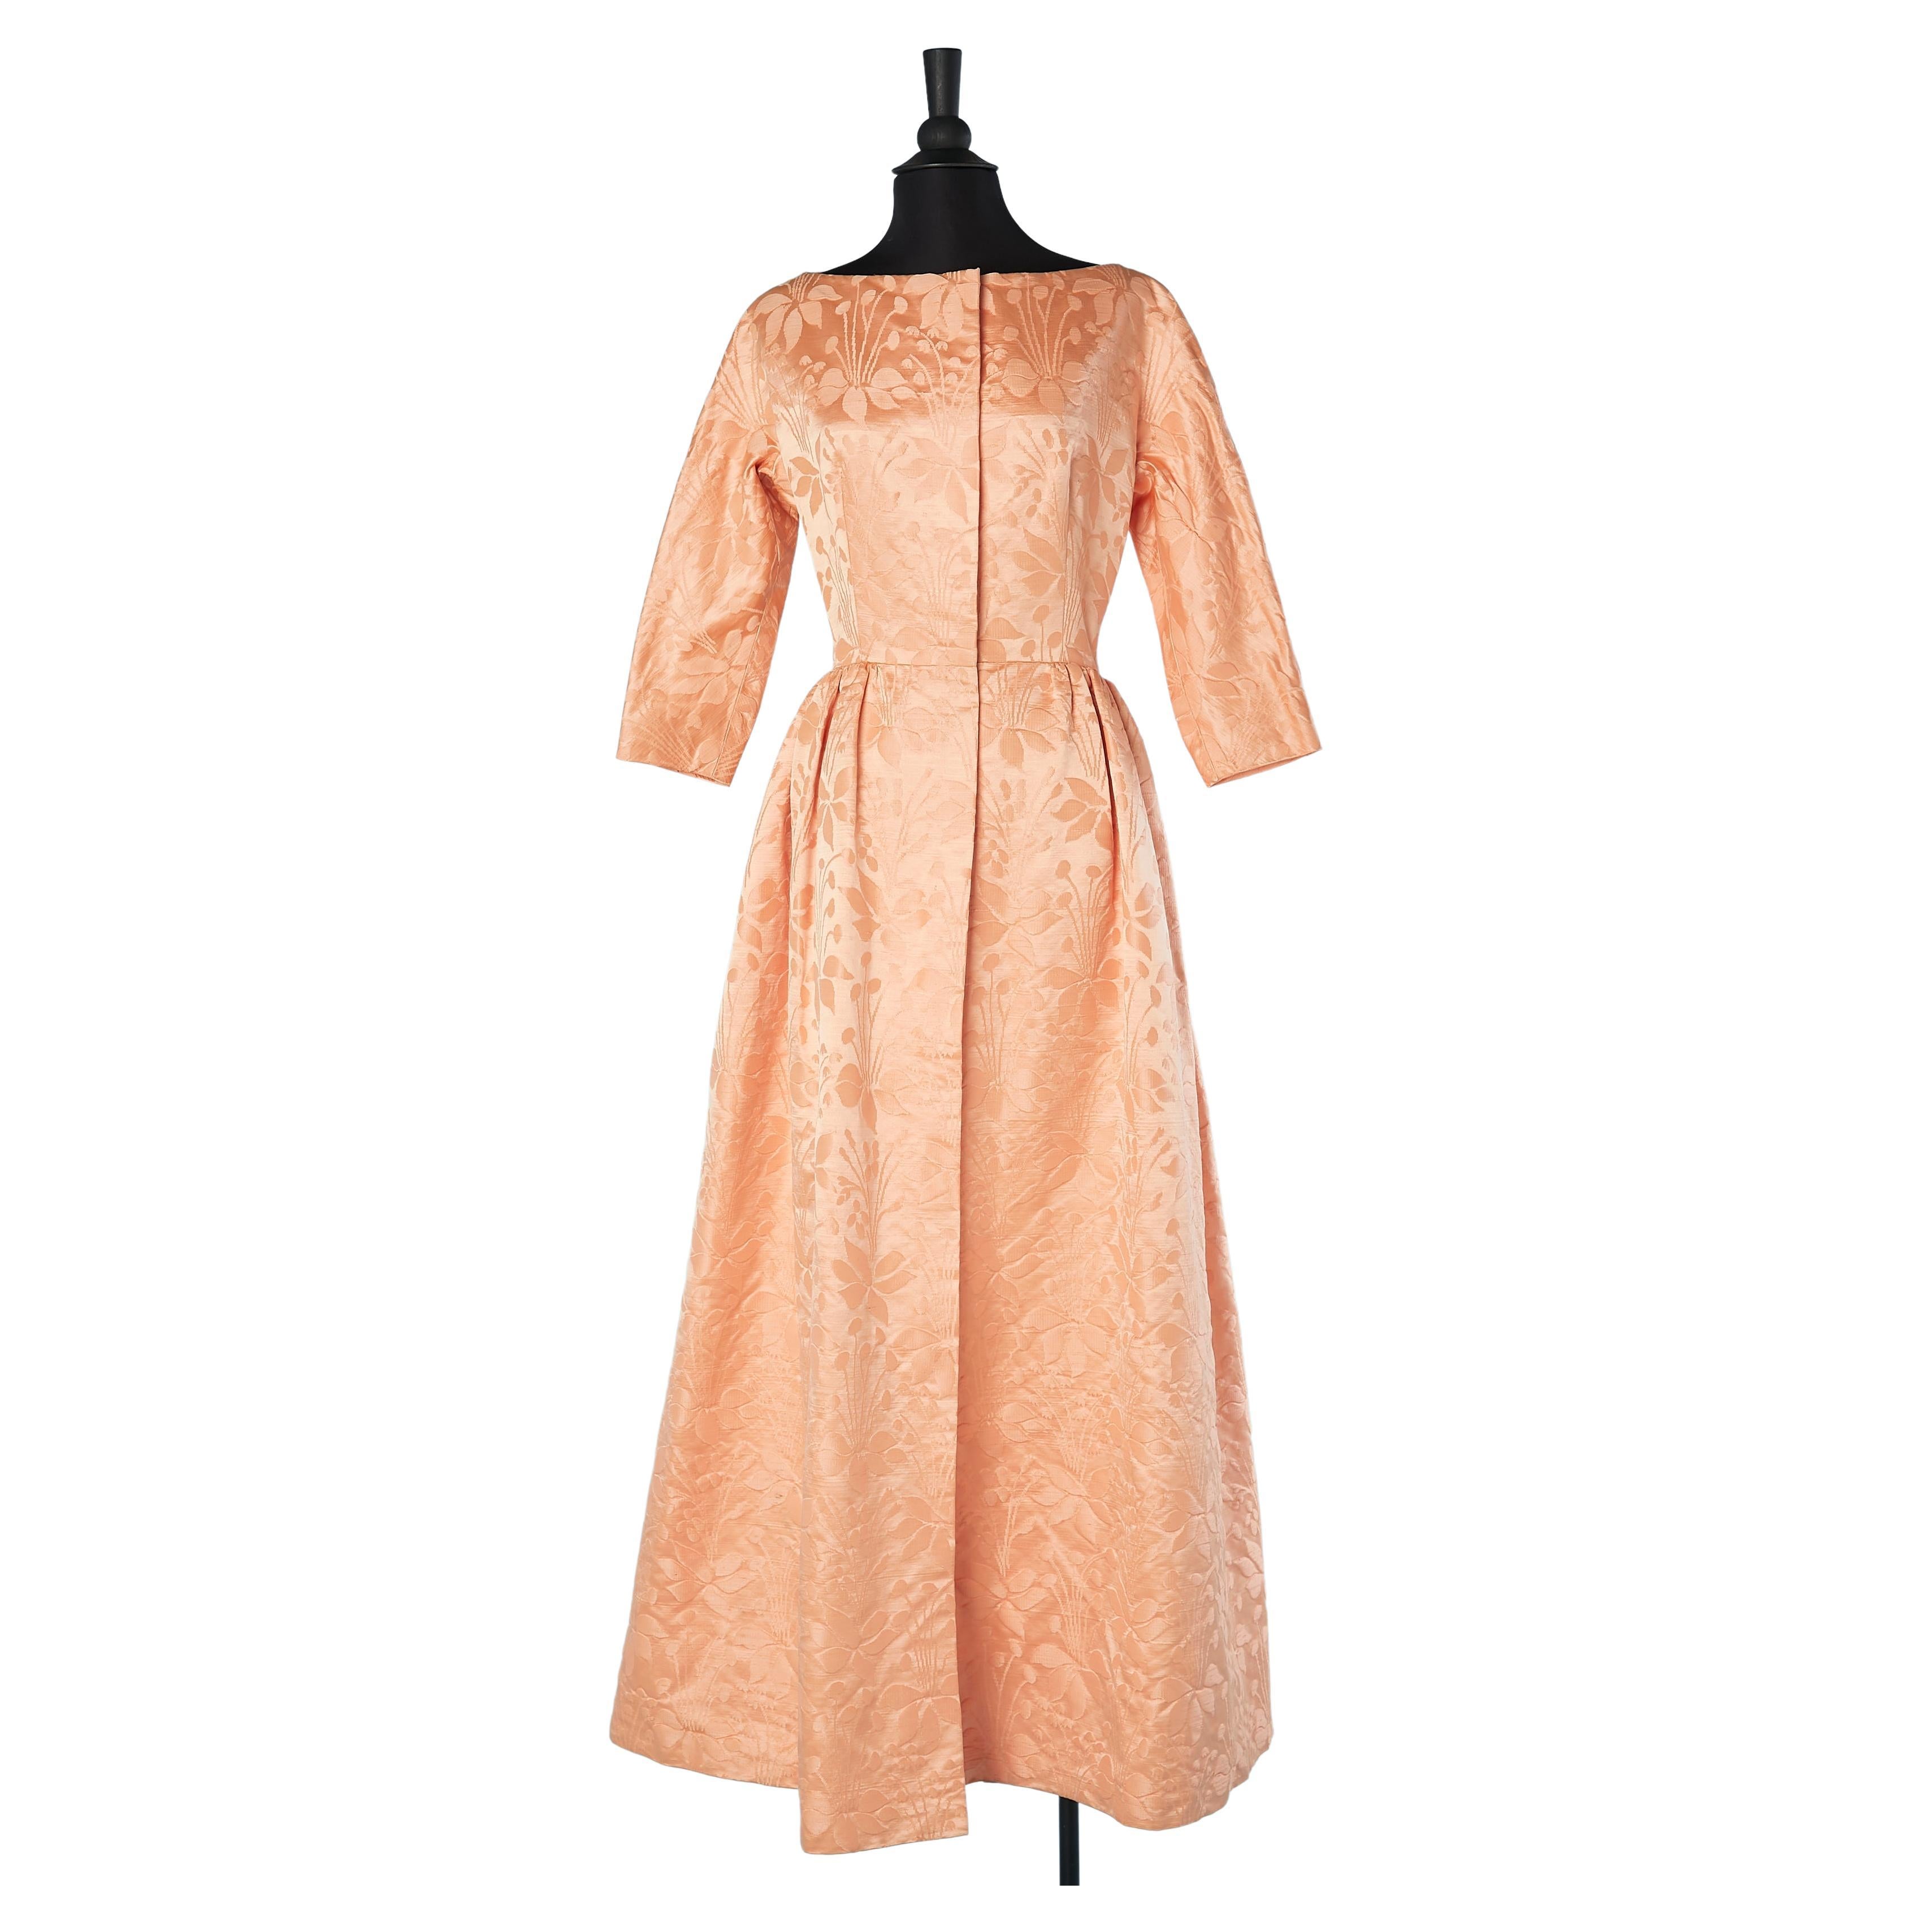 Orange-pink damask evening dress-coat attributed to Balenciaga  For Sale